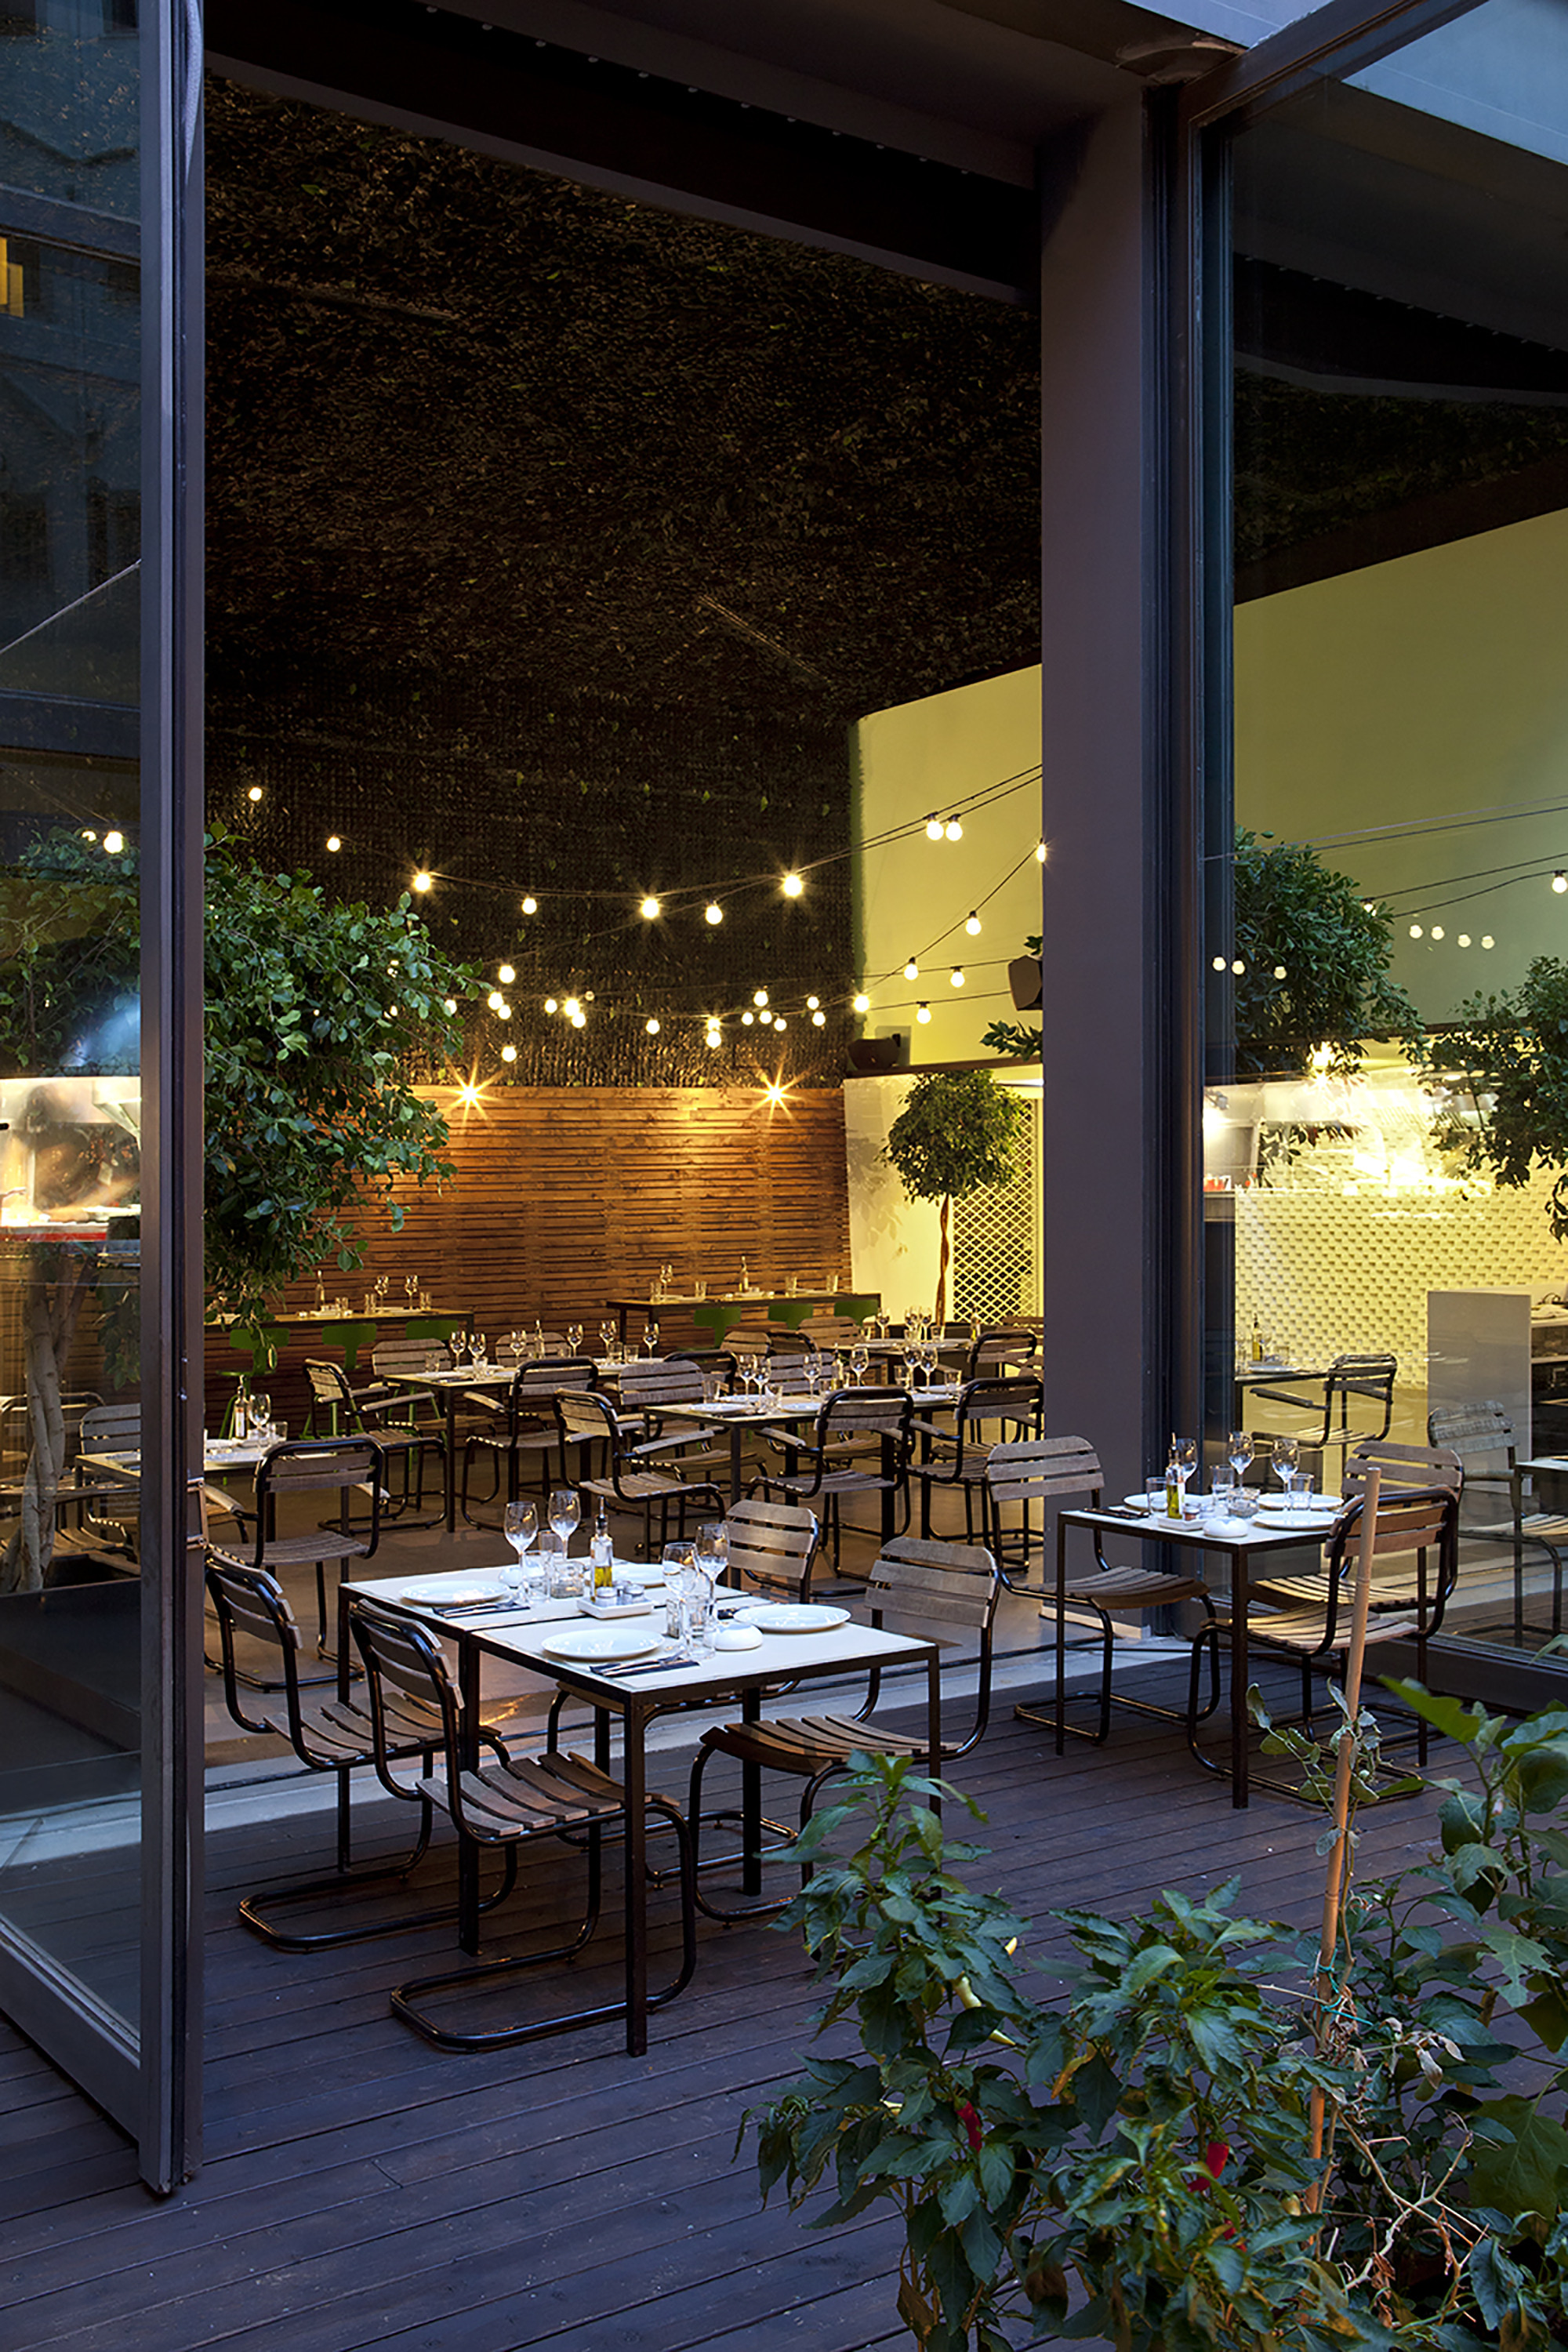 Restaurant Architectural Design Ideas: The 48 Urban Garden by AK-A